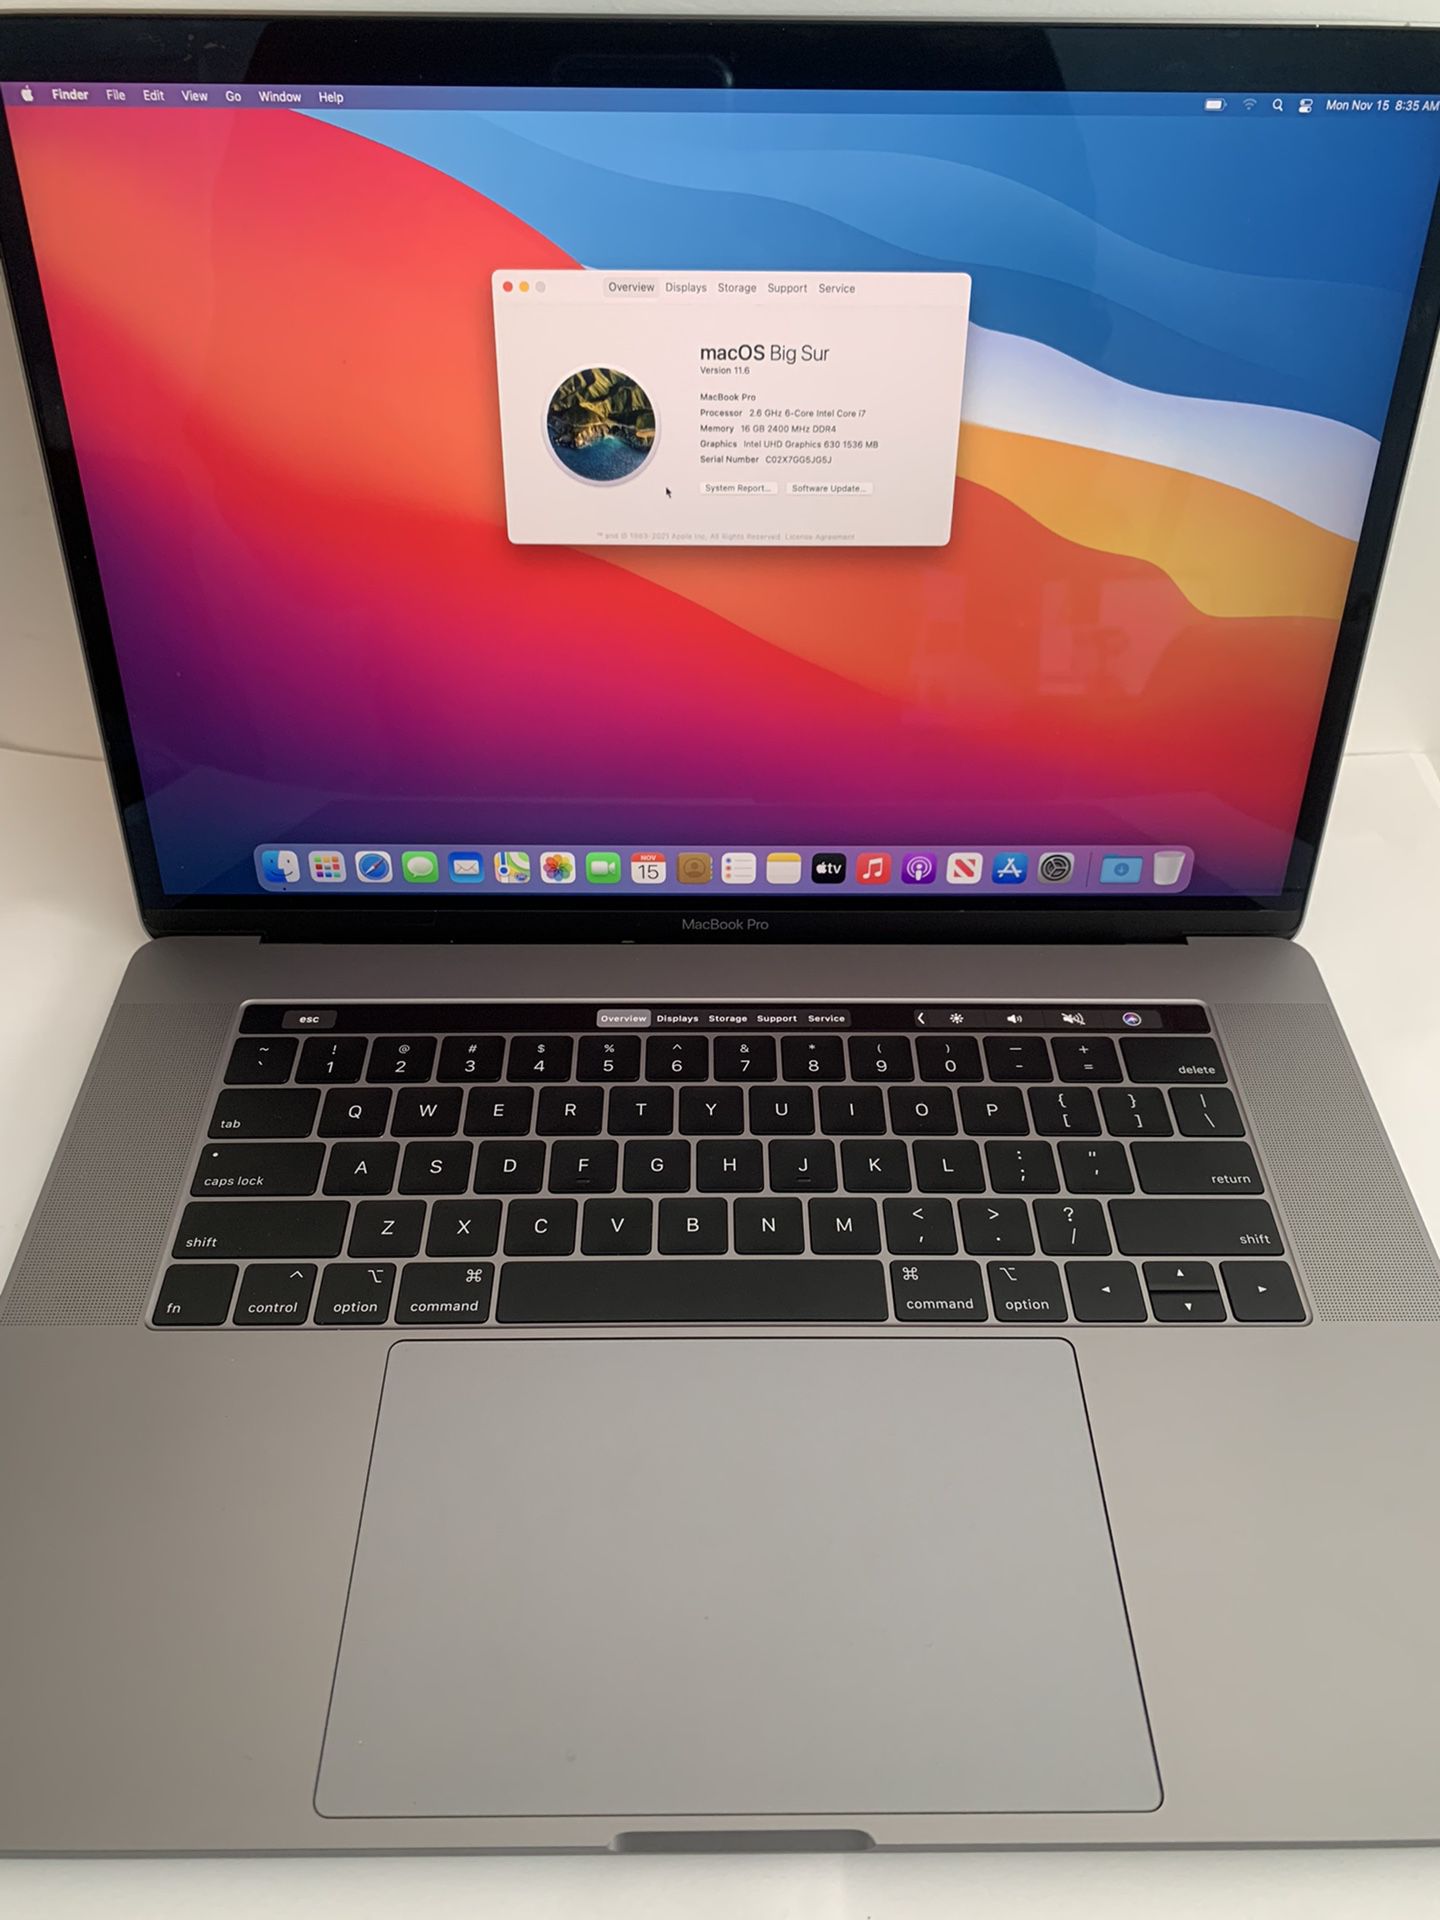 MacBook Pro 15-inch (2018), 2.6 GHz 6-Core Intel Core i7, 500 GB SSD, 16 GB RAM